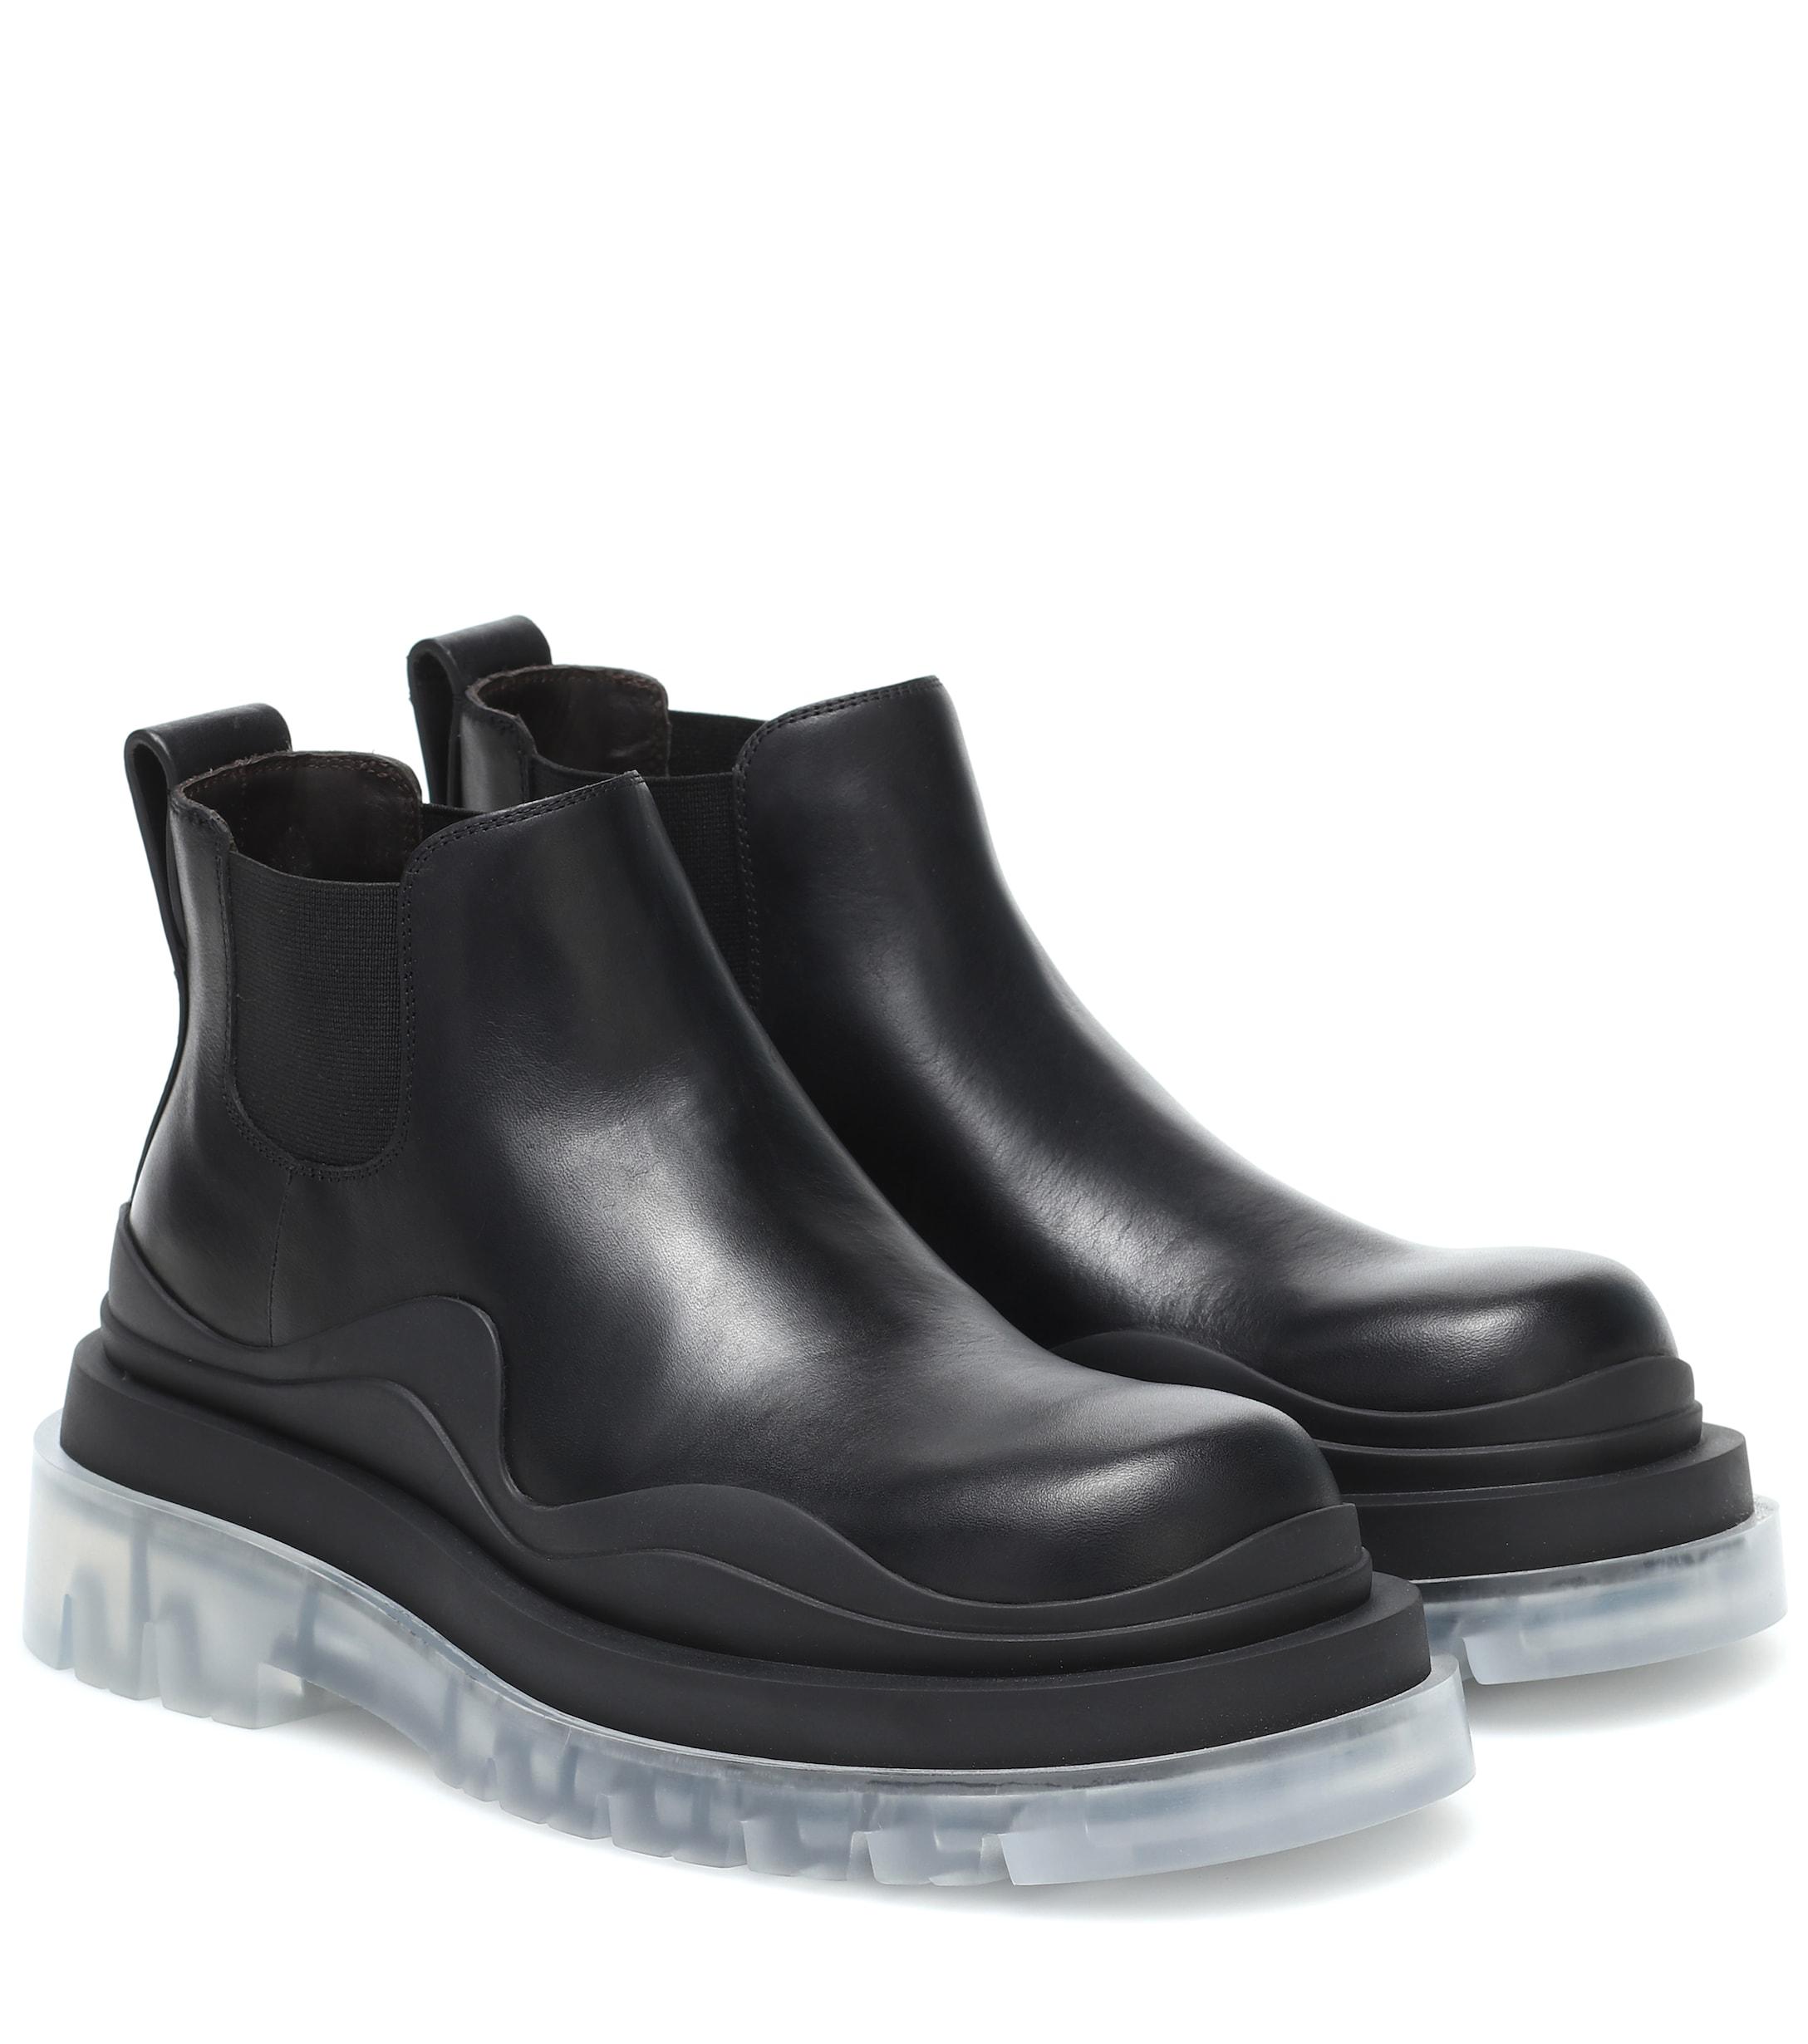 Bottega Veneta Bv Tire Leather Ankle Boots in Black - Lyst